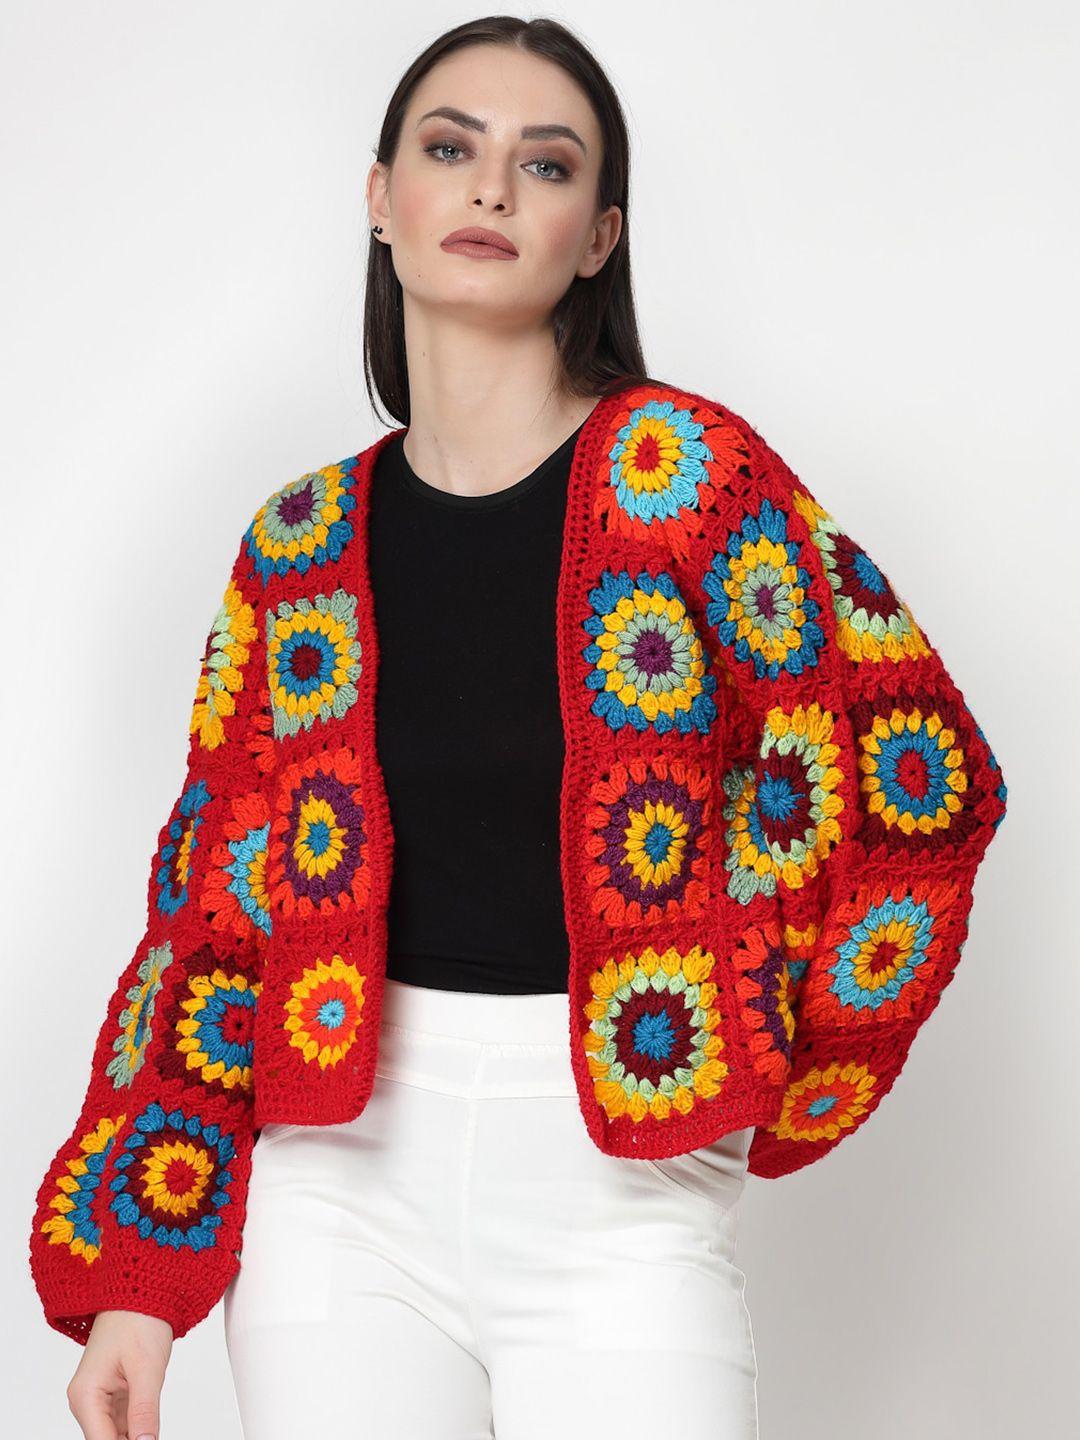 velvery crochet granny square acrylic front open sweater